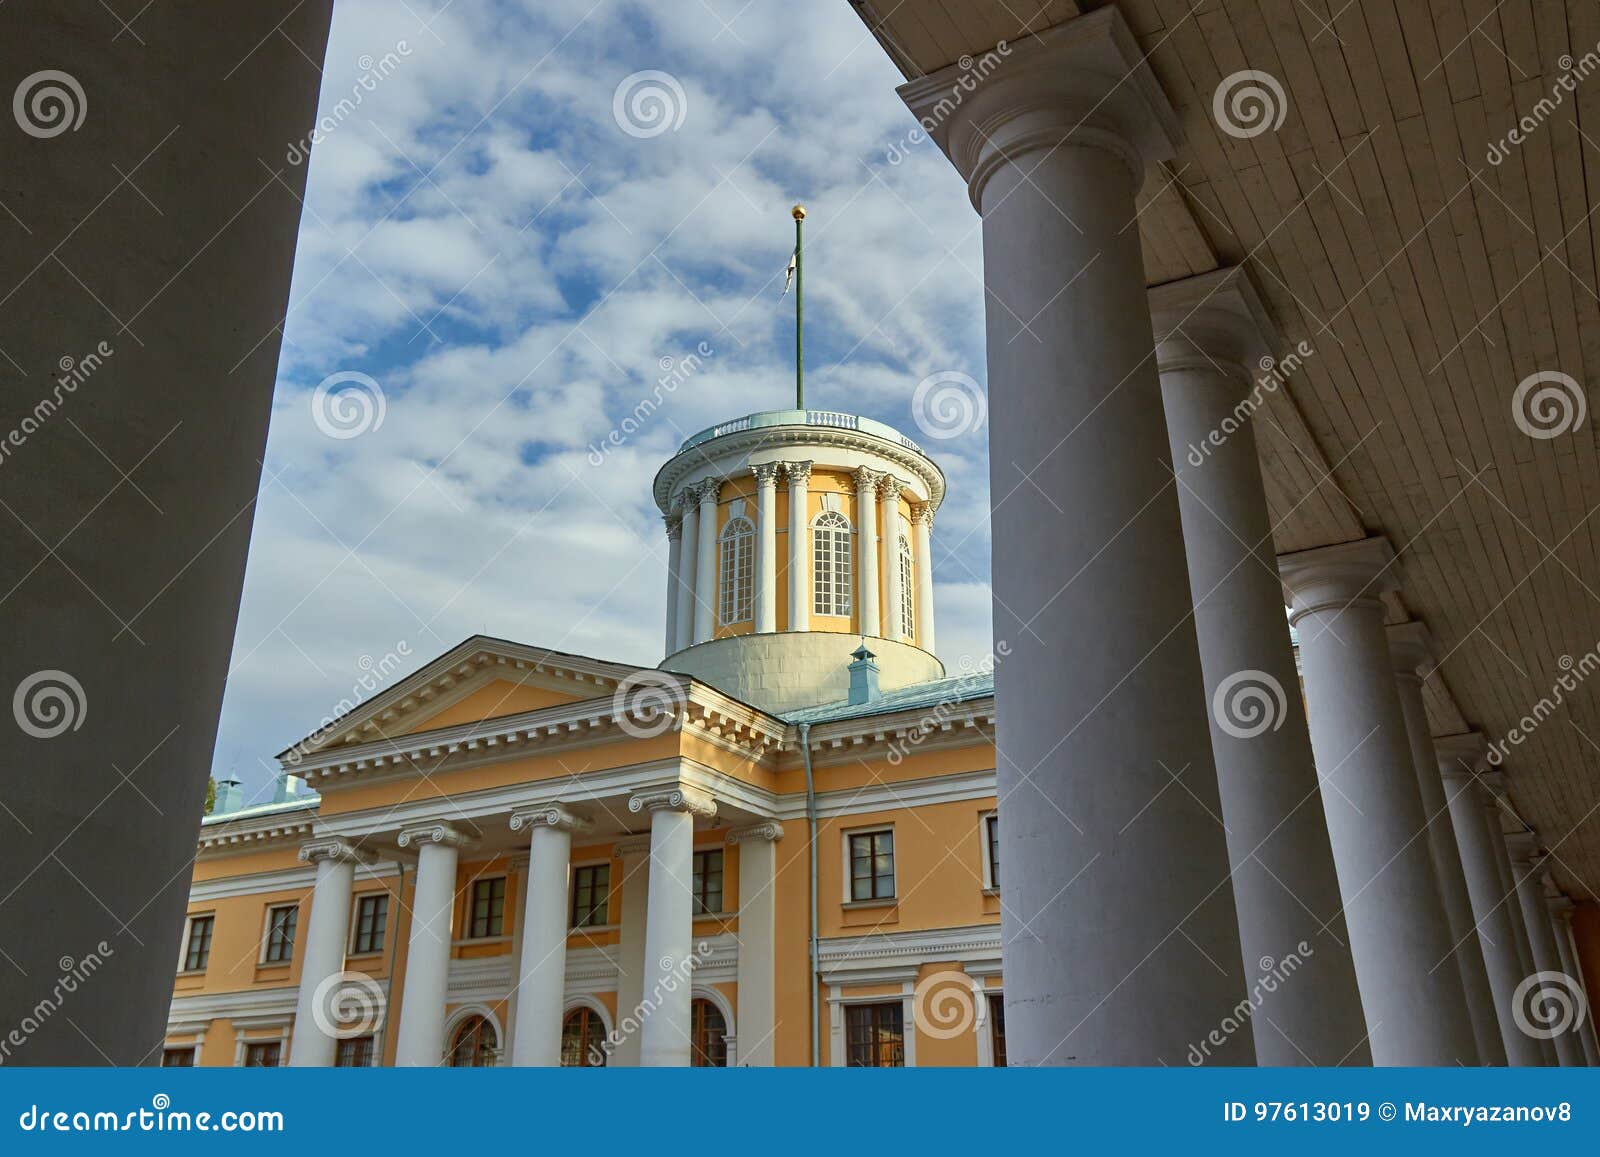 Arkhangelskoye Estate, Russia Stock Image - Image of destinations ...
